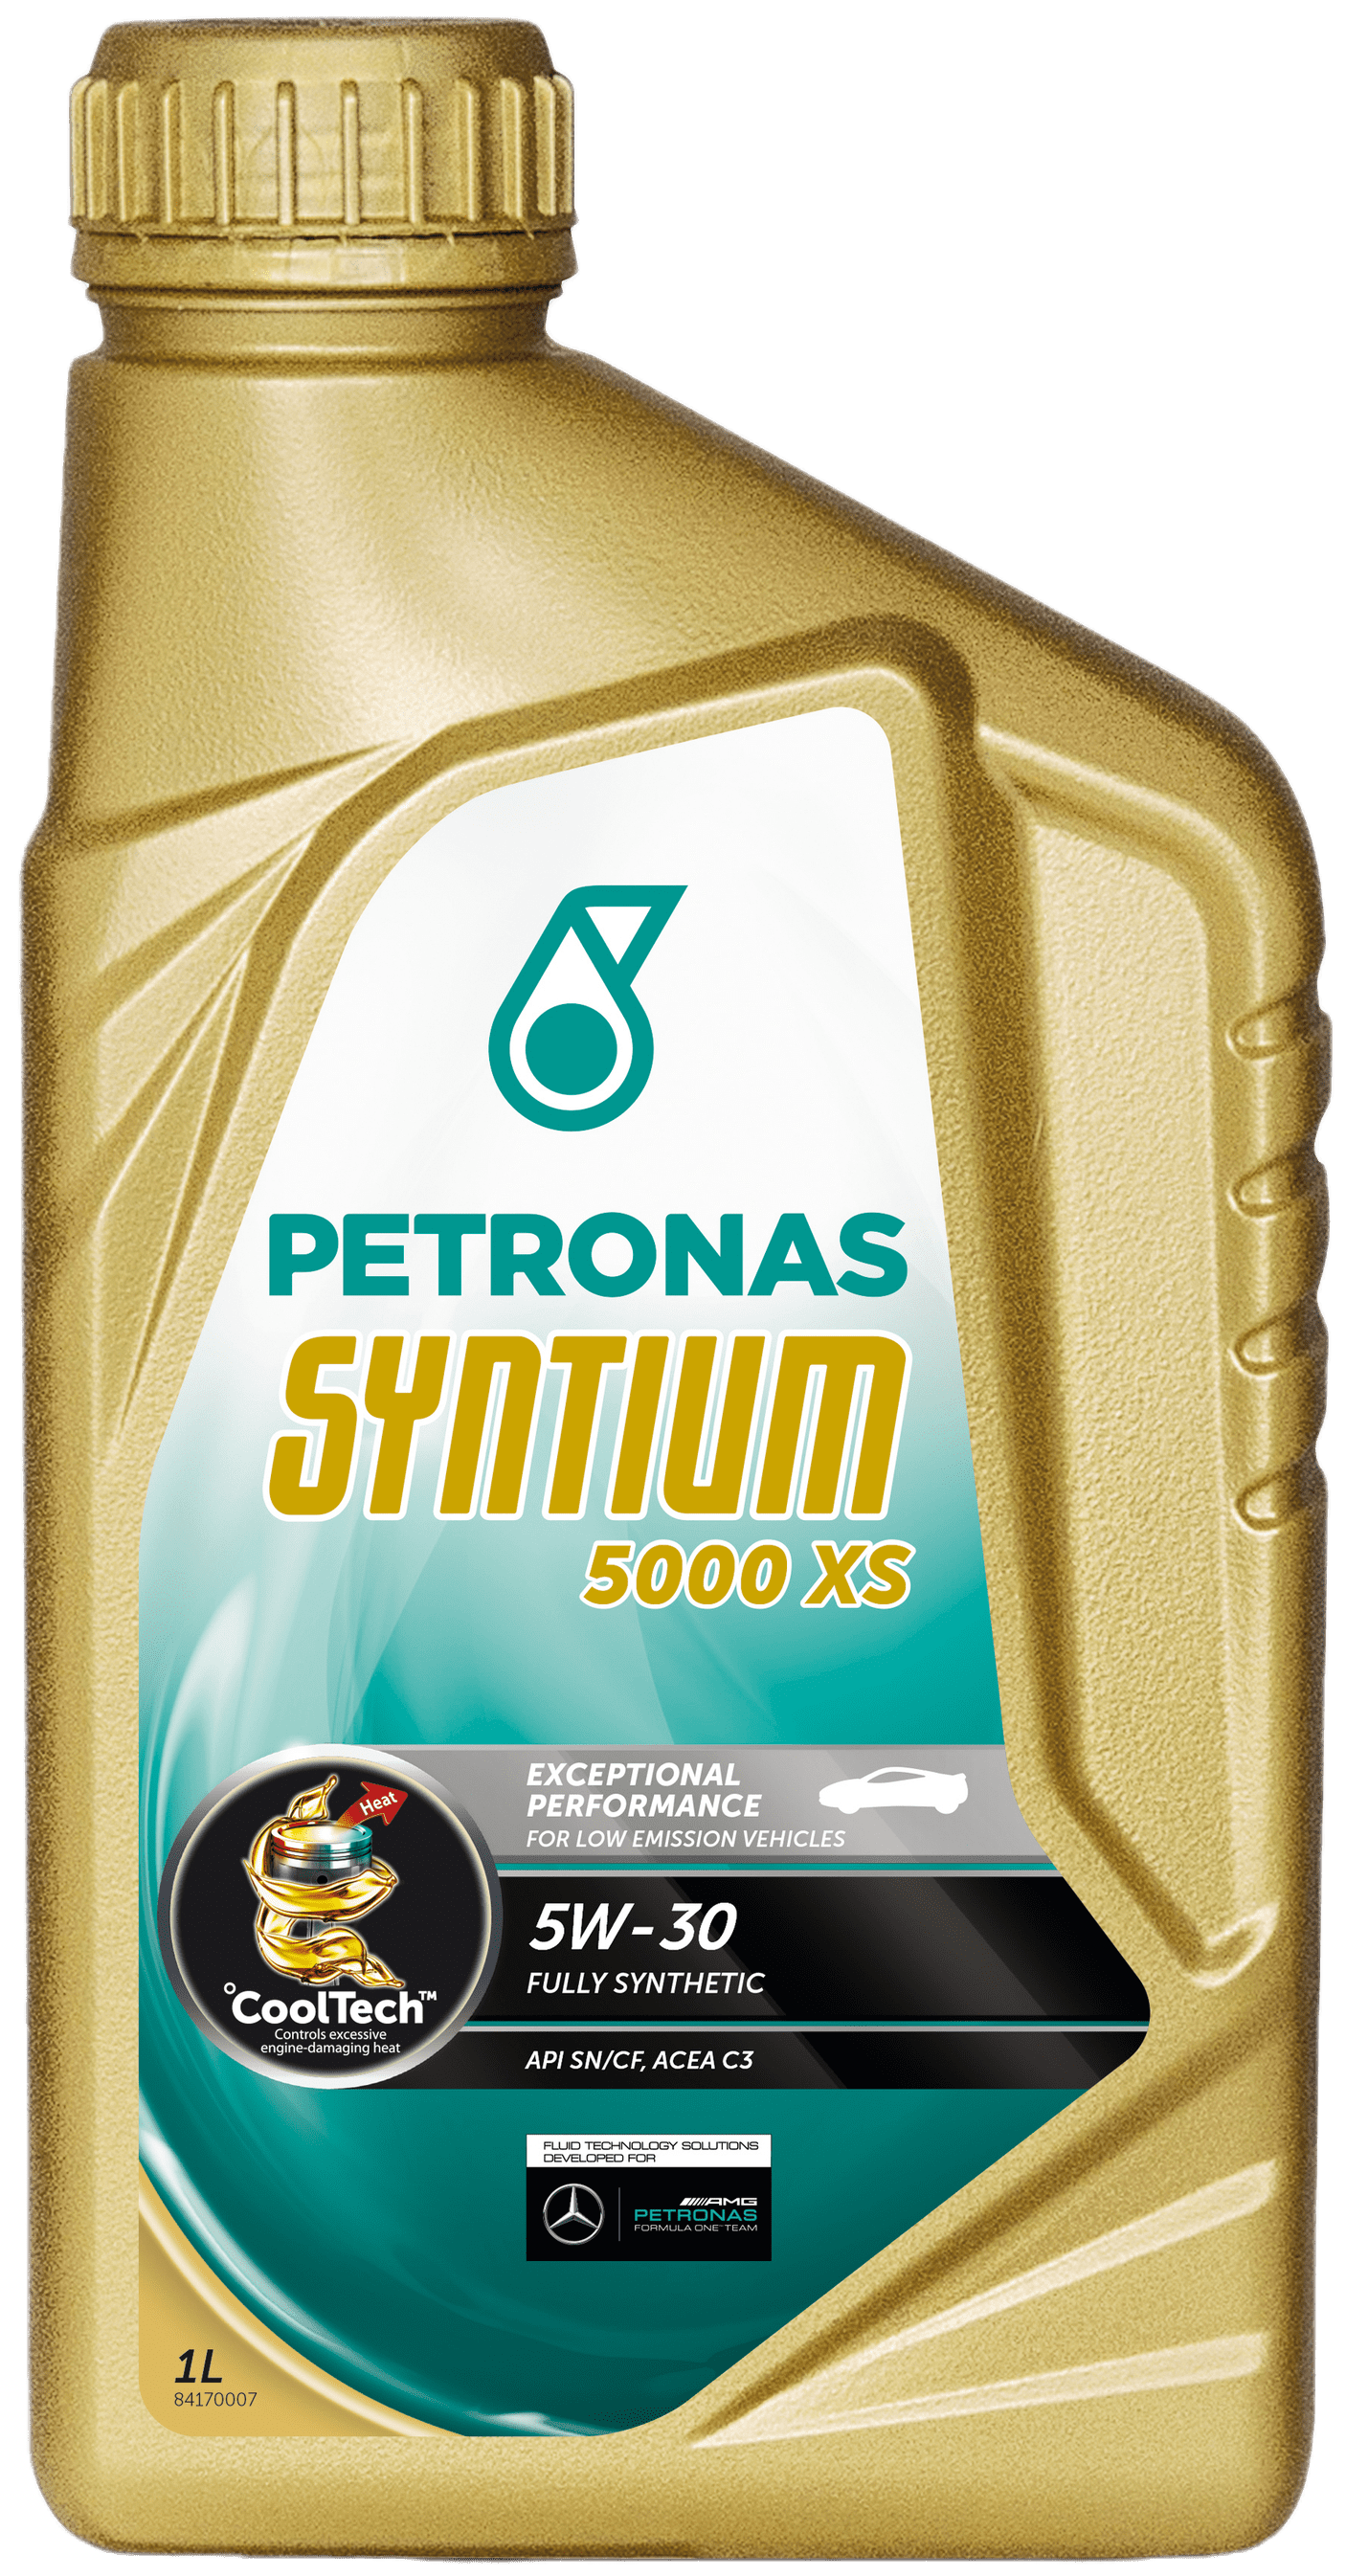 Petronas Syntium 5000 XS 5W-30, 20 x 1 lt detail 2